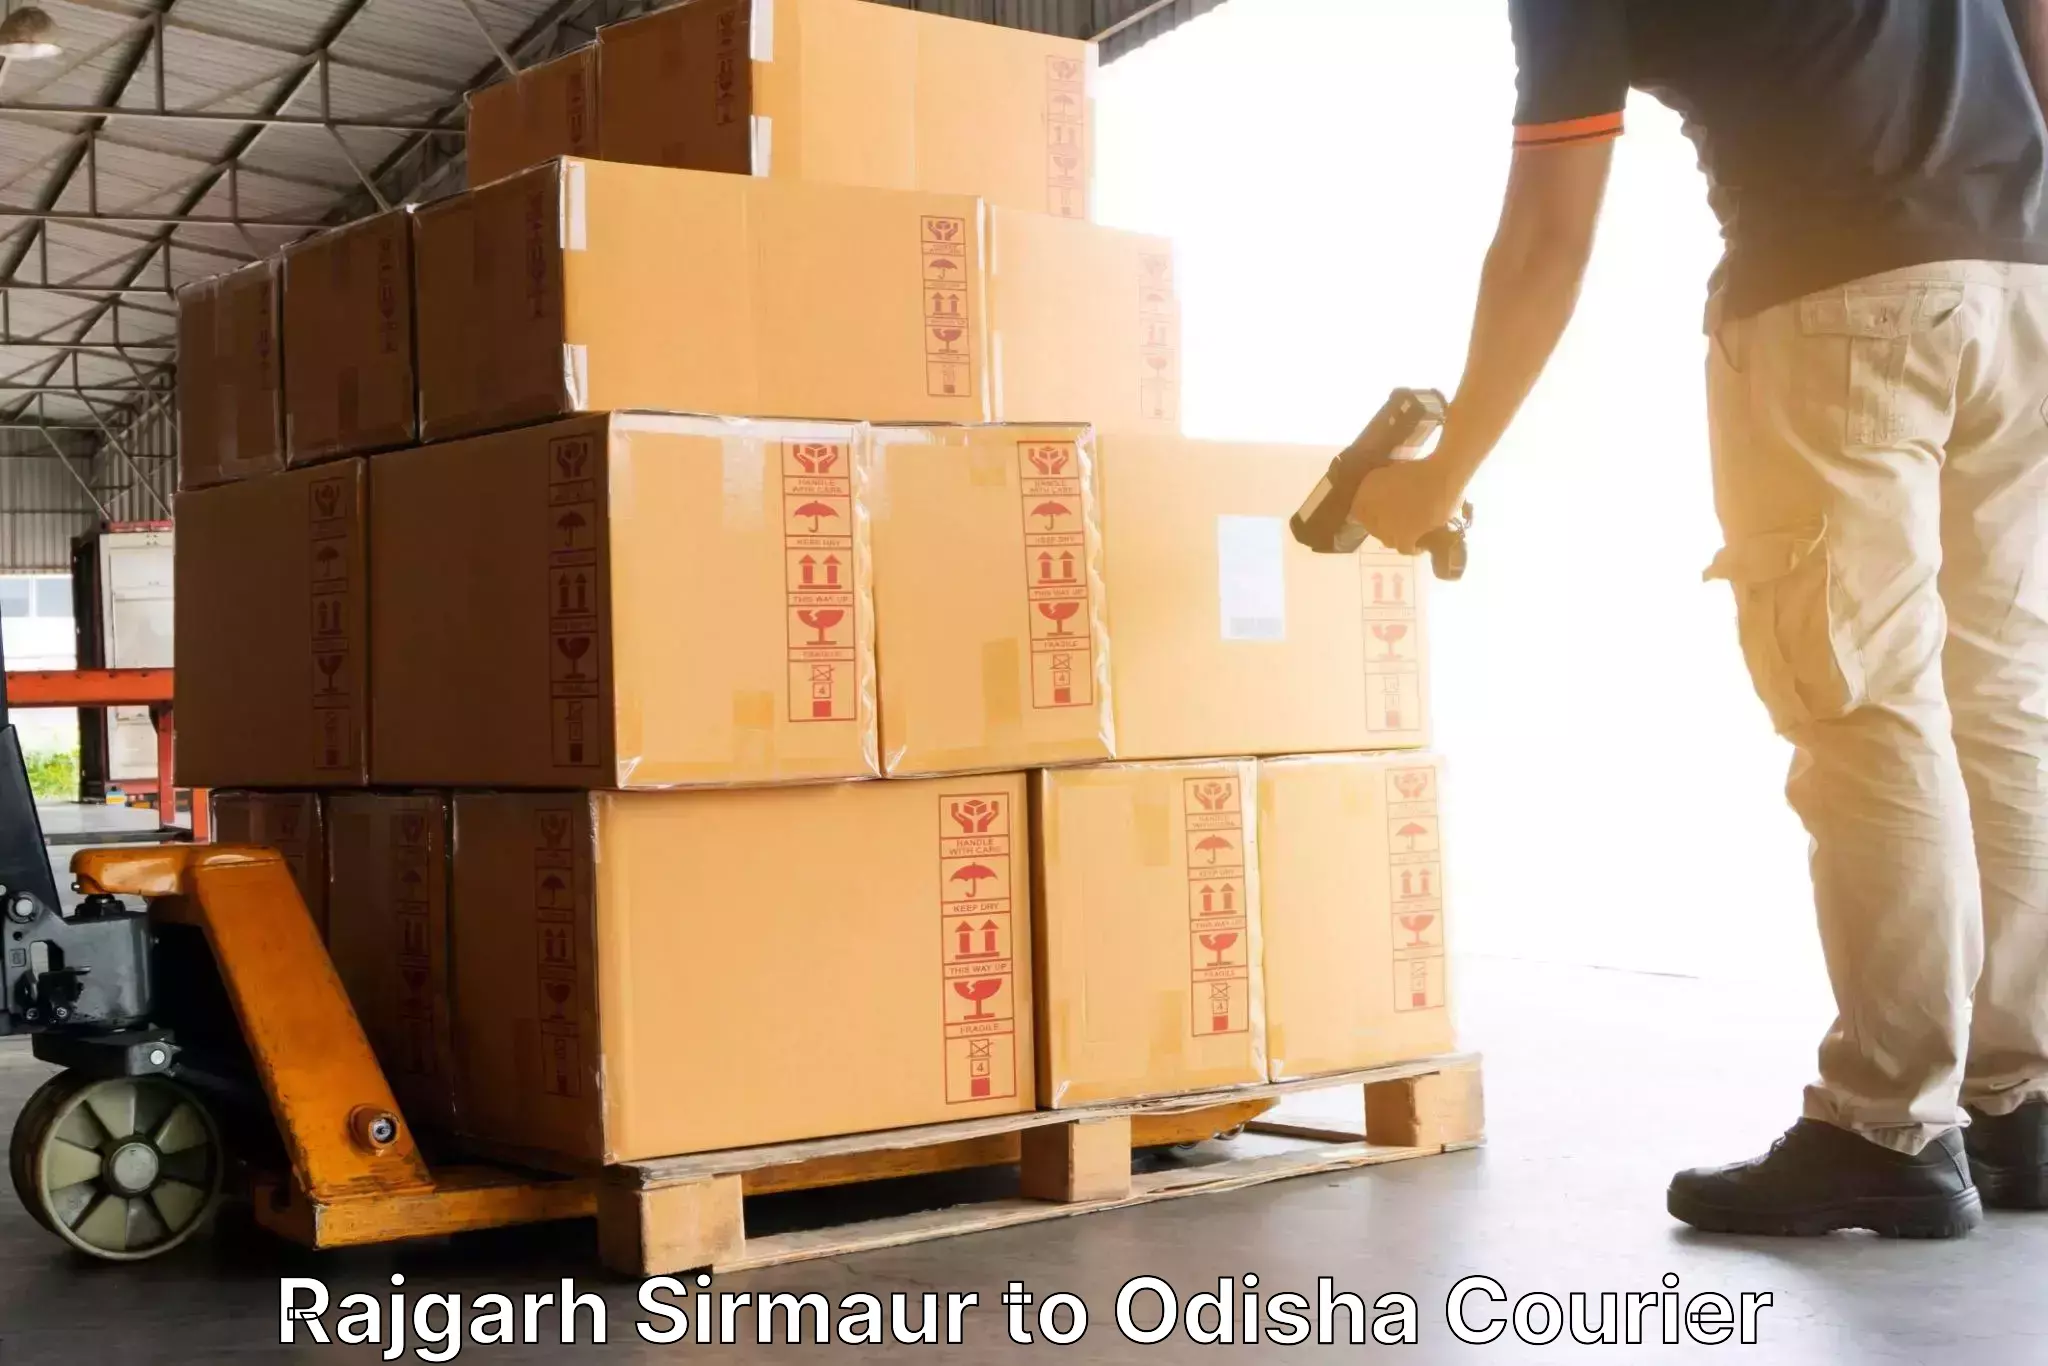 Efficient freight service Rajgarh Sirmaur to Komana